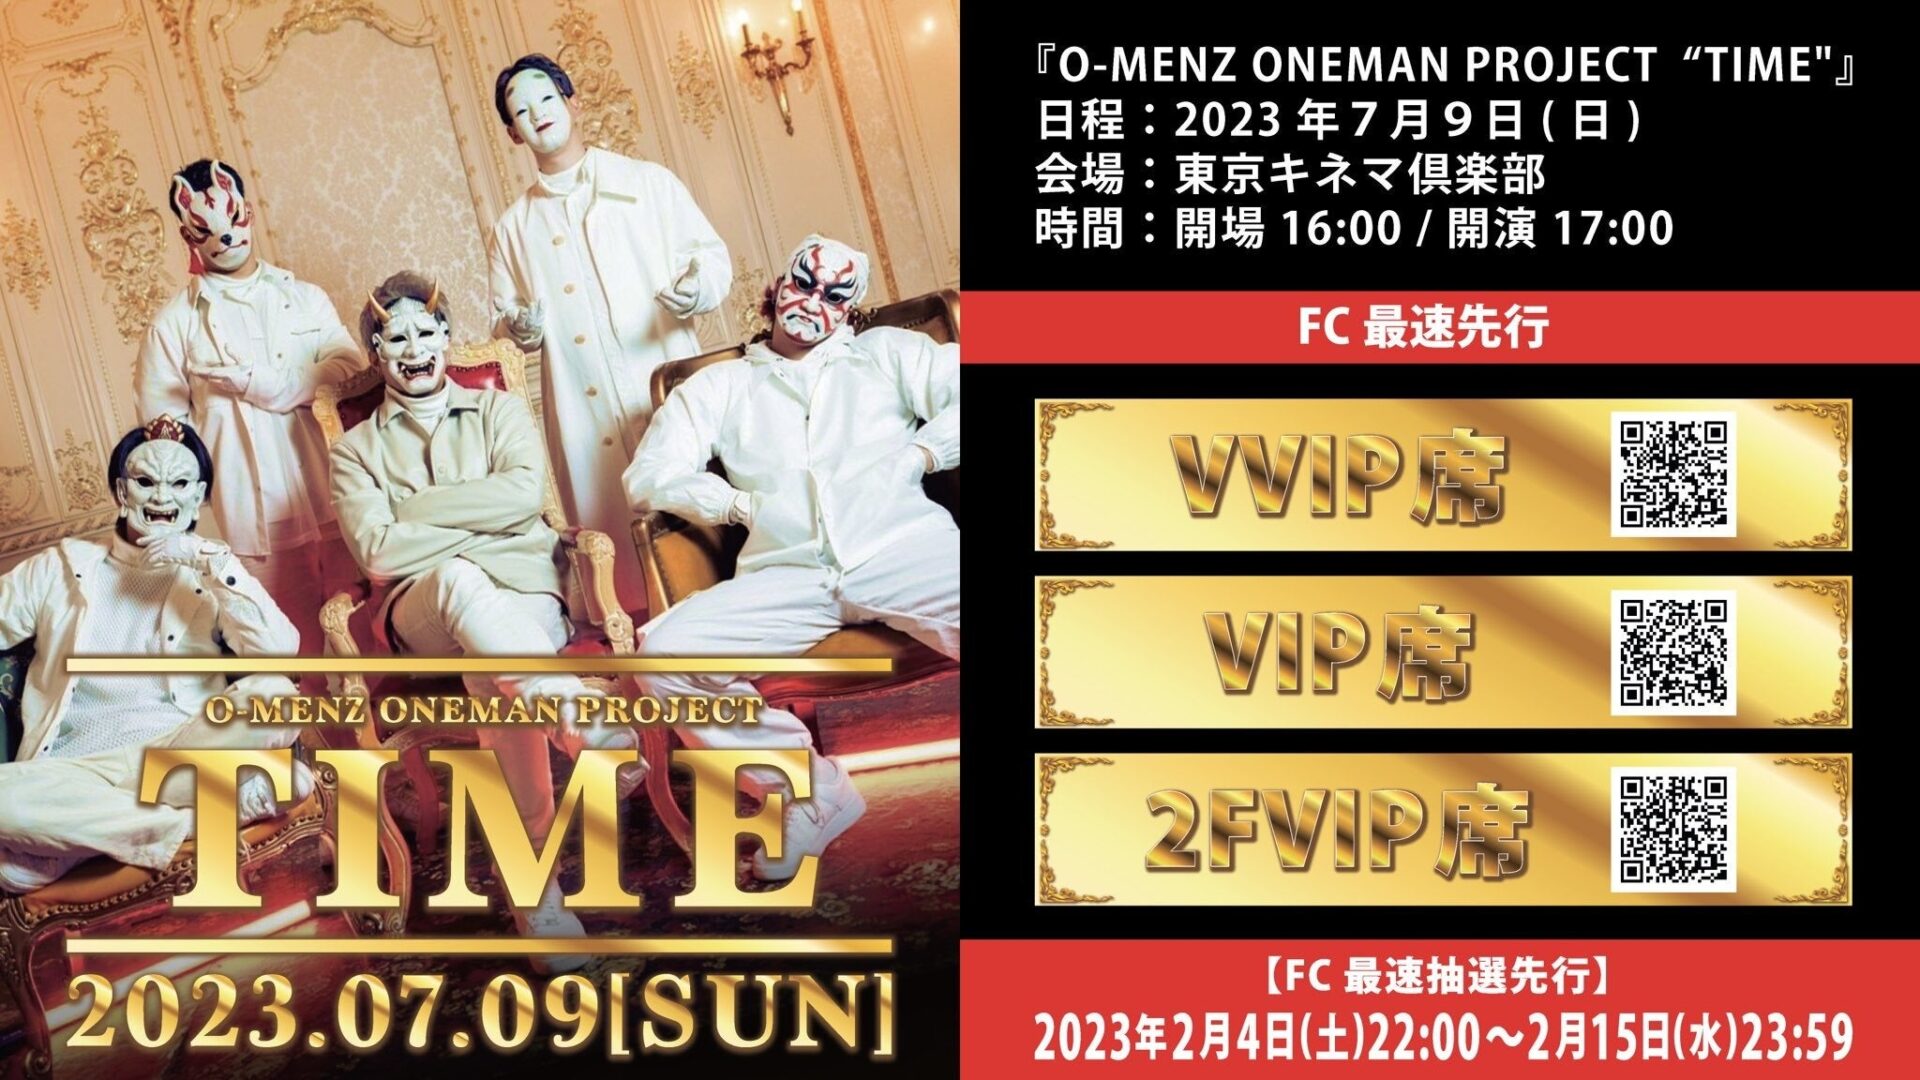 METEORA st.所属 #謎のお面集団 「O-MENZ」が ワンマンライブ『O-MENZ ONEMAN PROJECT "TIME"』を 7 月 9 日(日)開催!